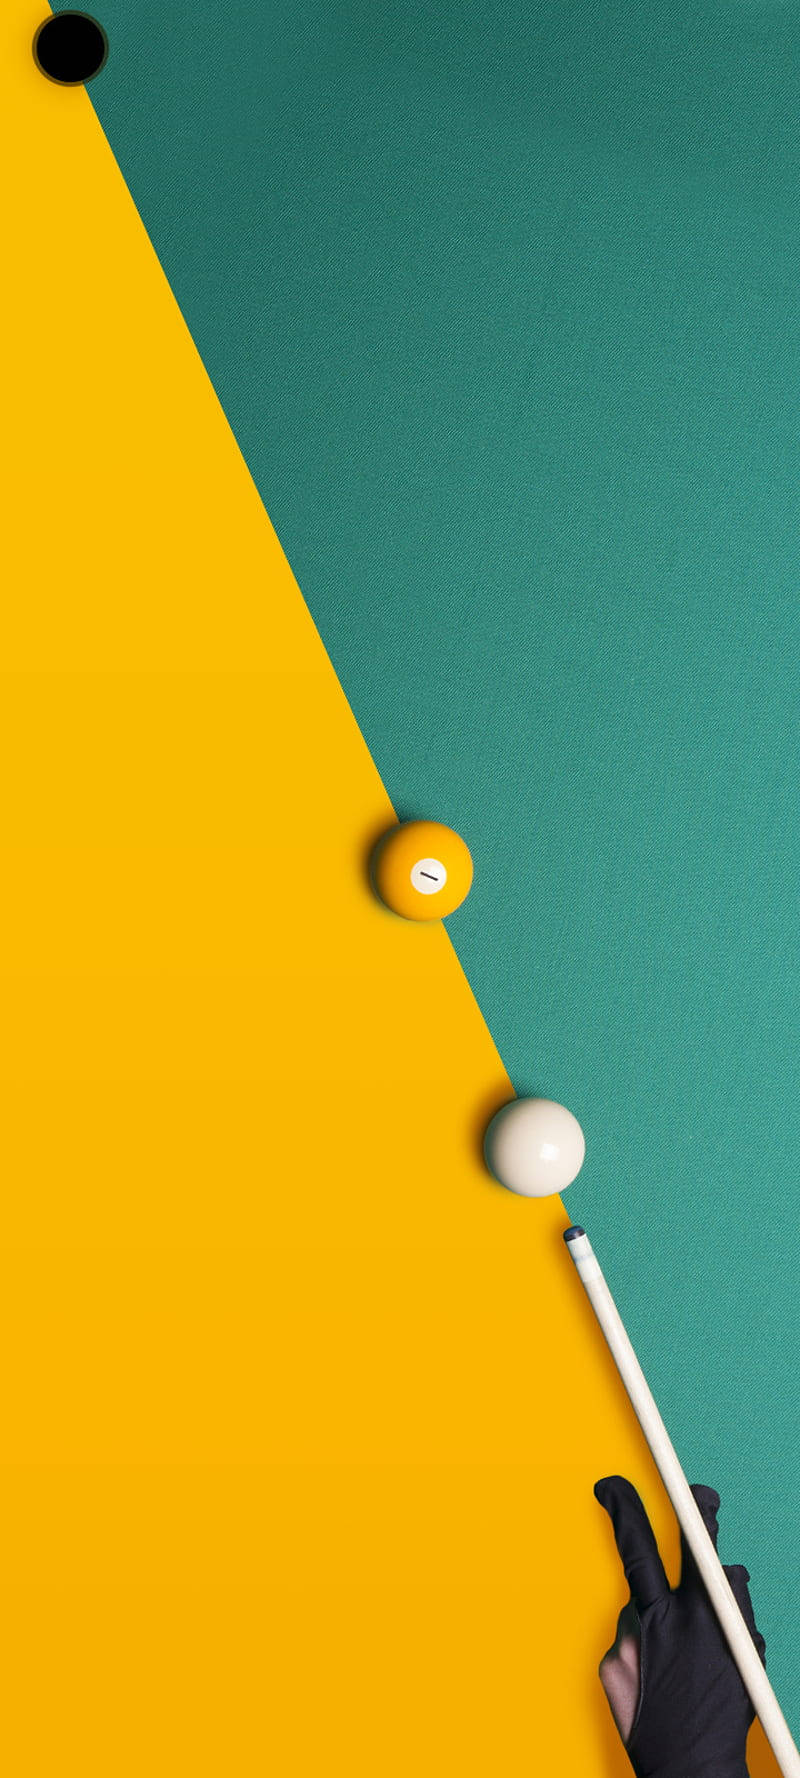 Billiards Punch Hole Background